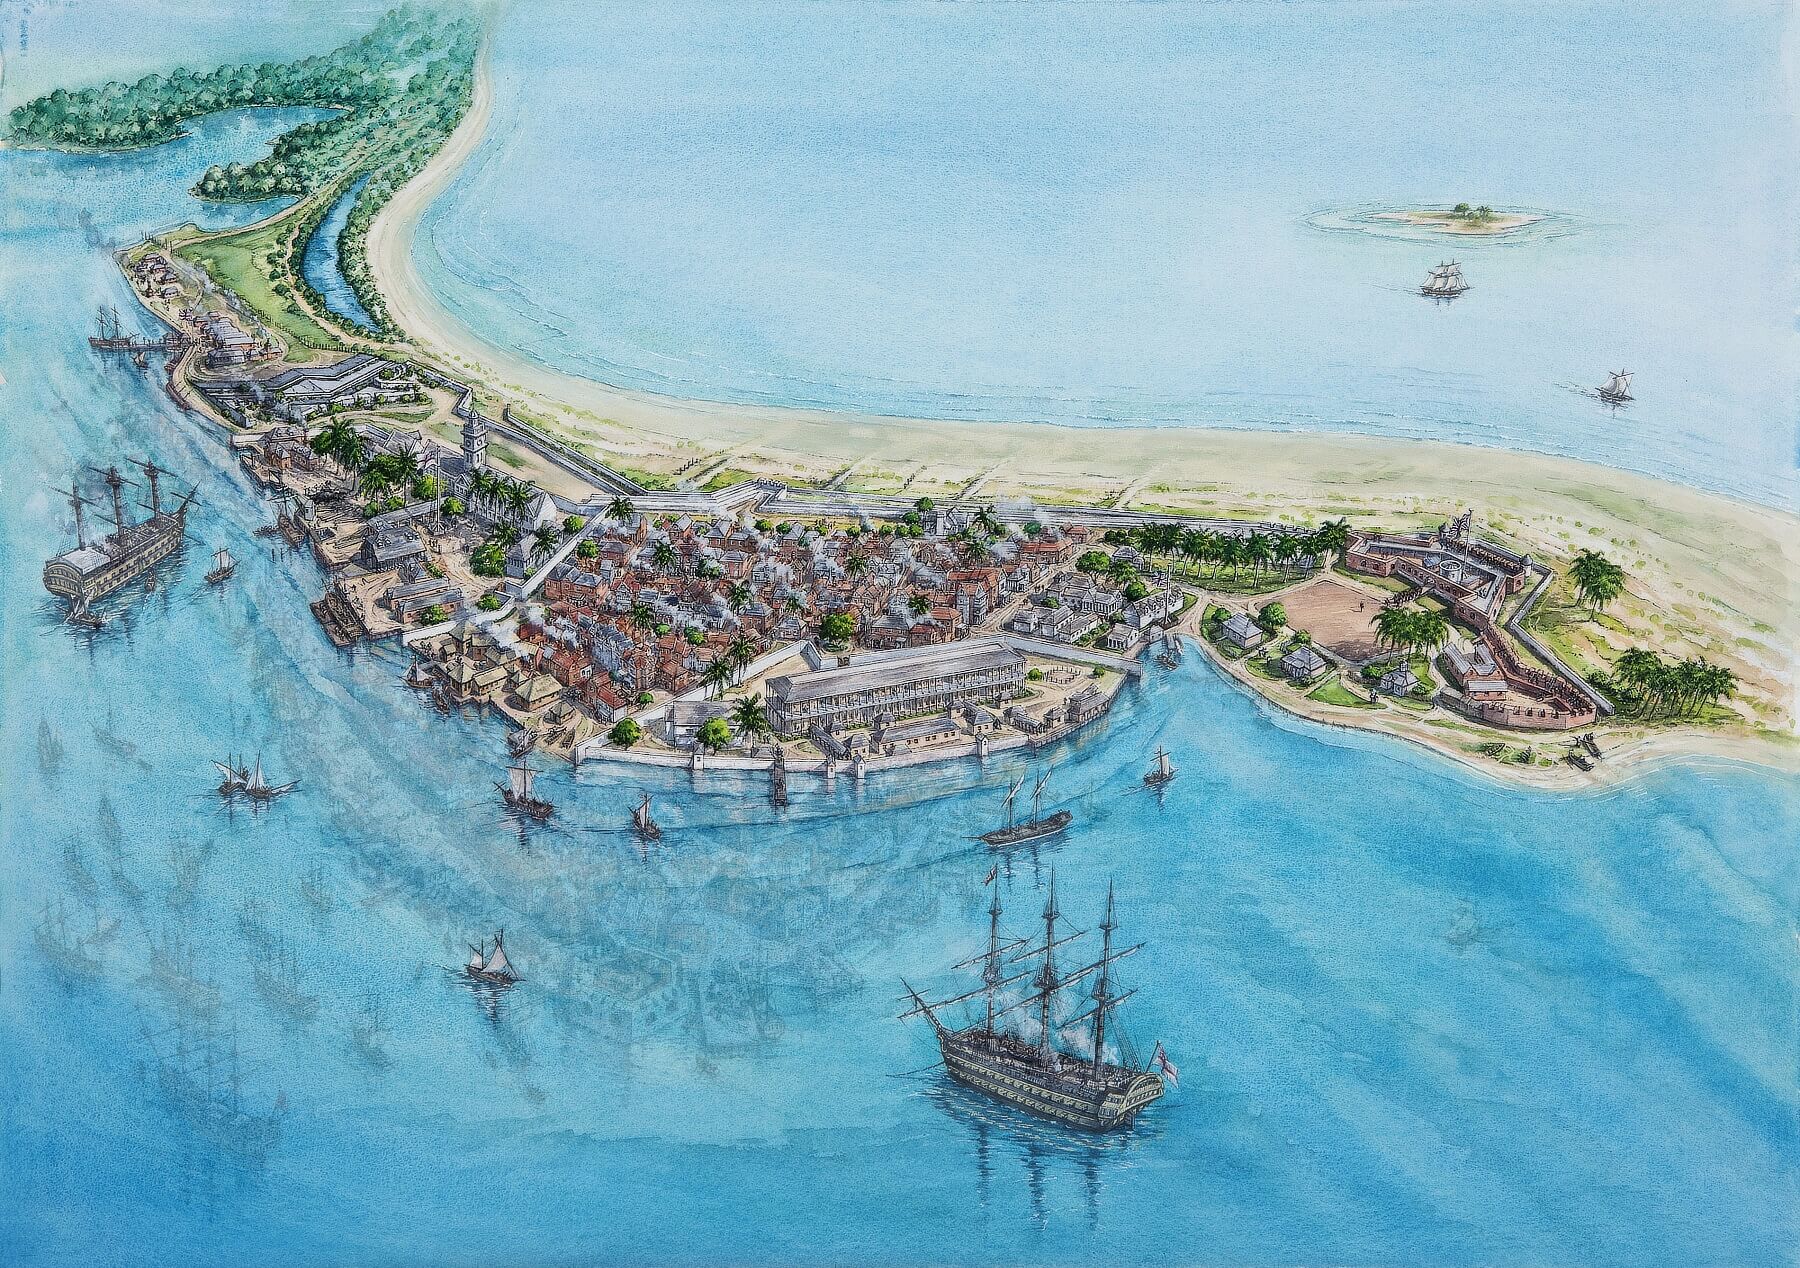 Port Royal circa 1690 prior to the 1692 Earthquake